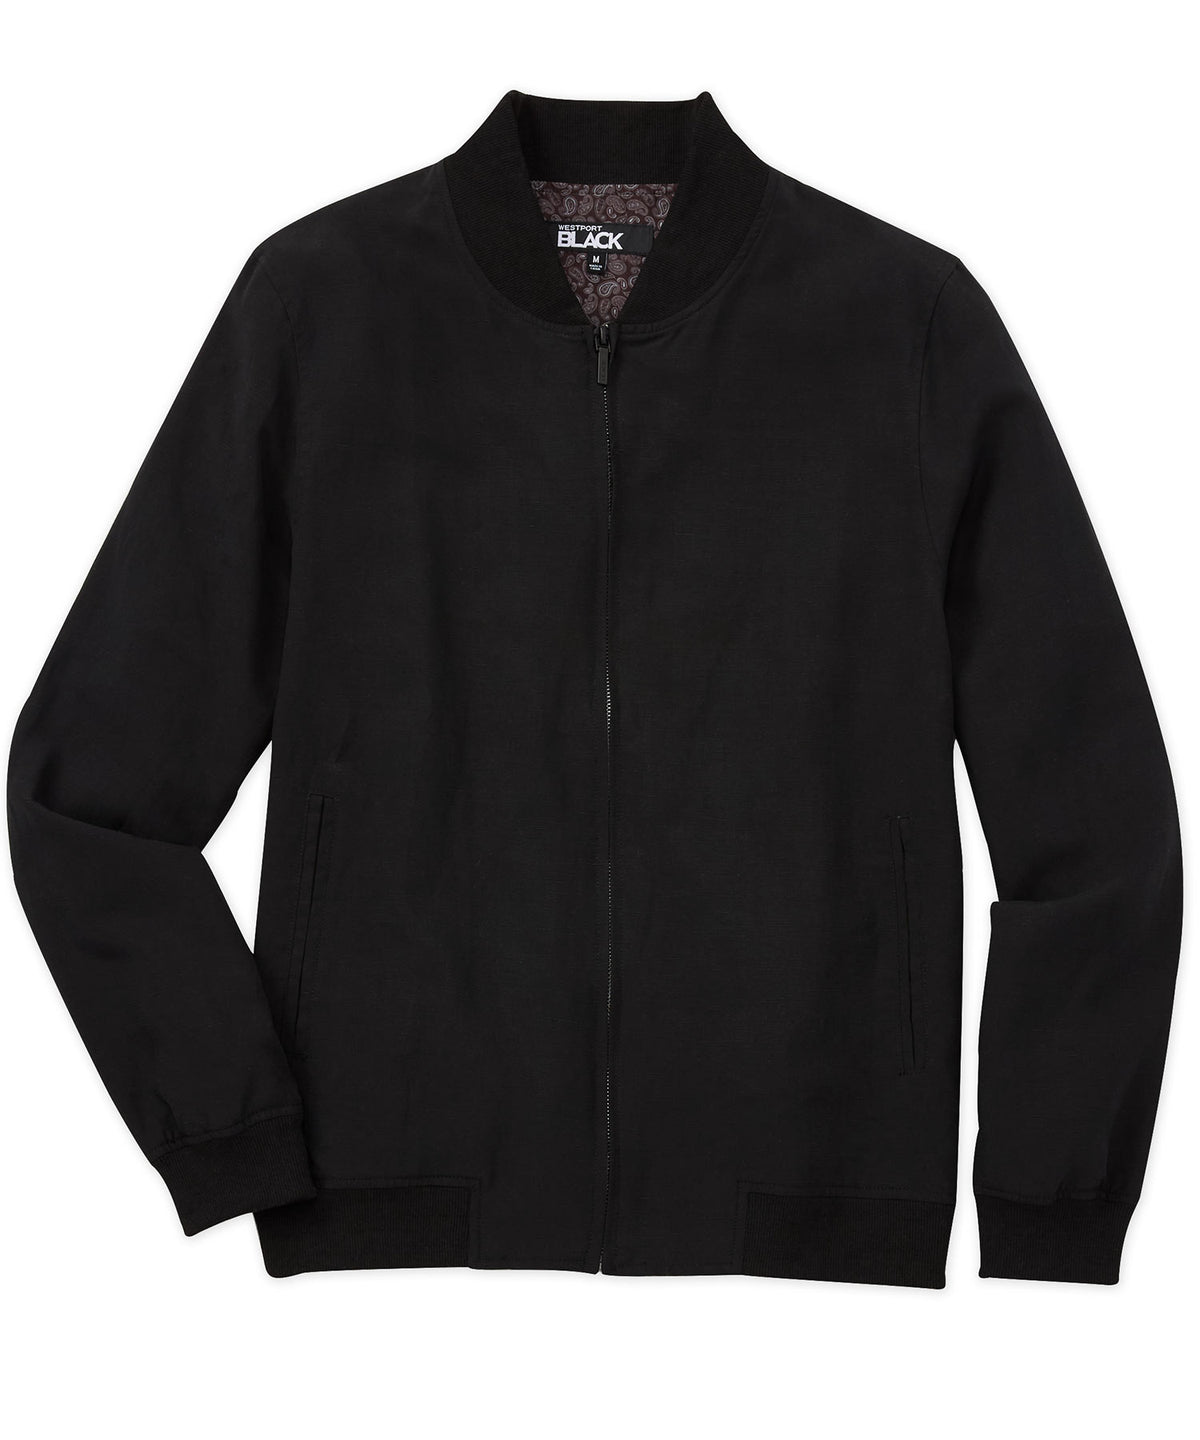 Westport Black Stretch Cotton Blouson Jacket, Big & Tall